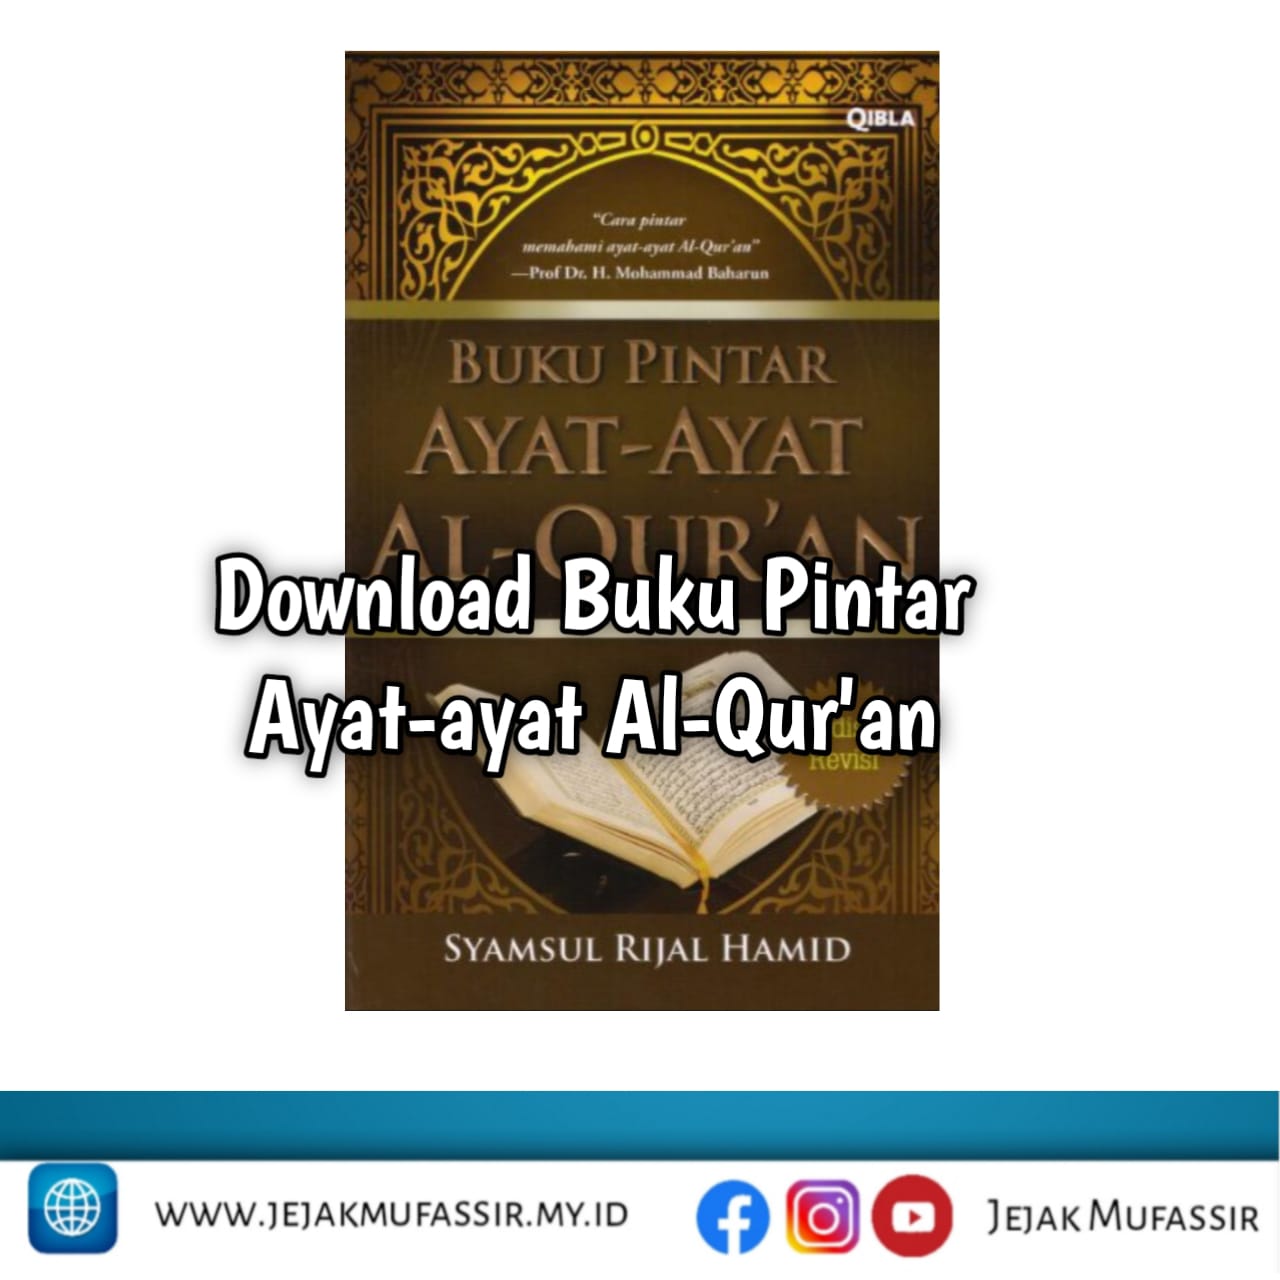 Download Buku Pintar Ayat-Ayat Al-Quran